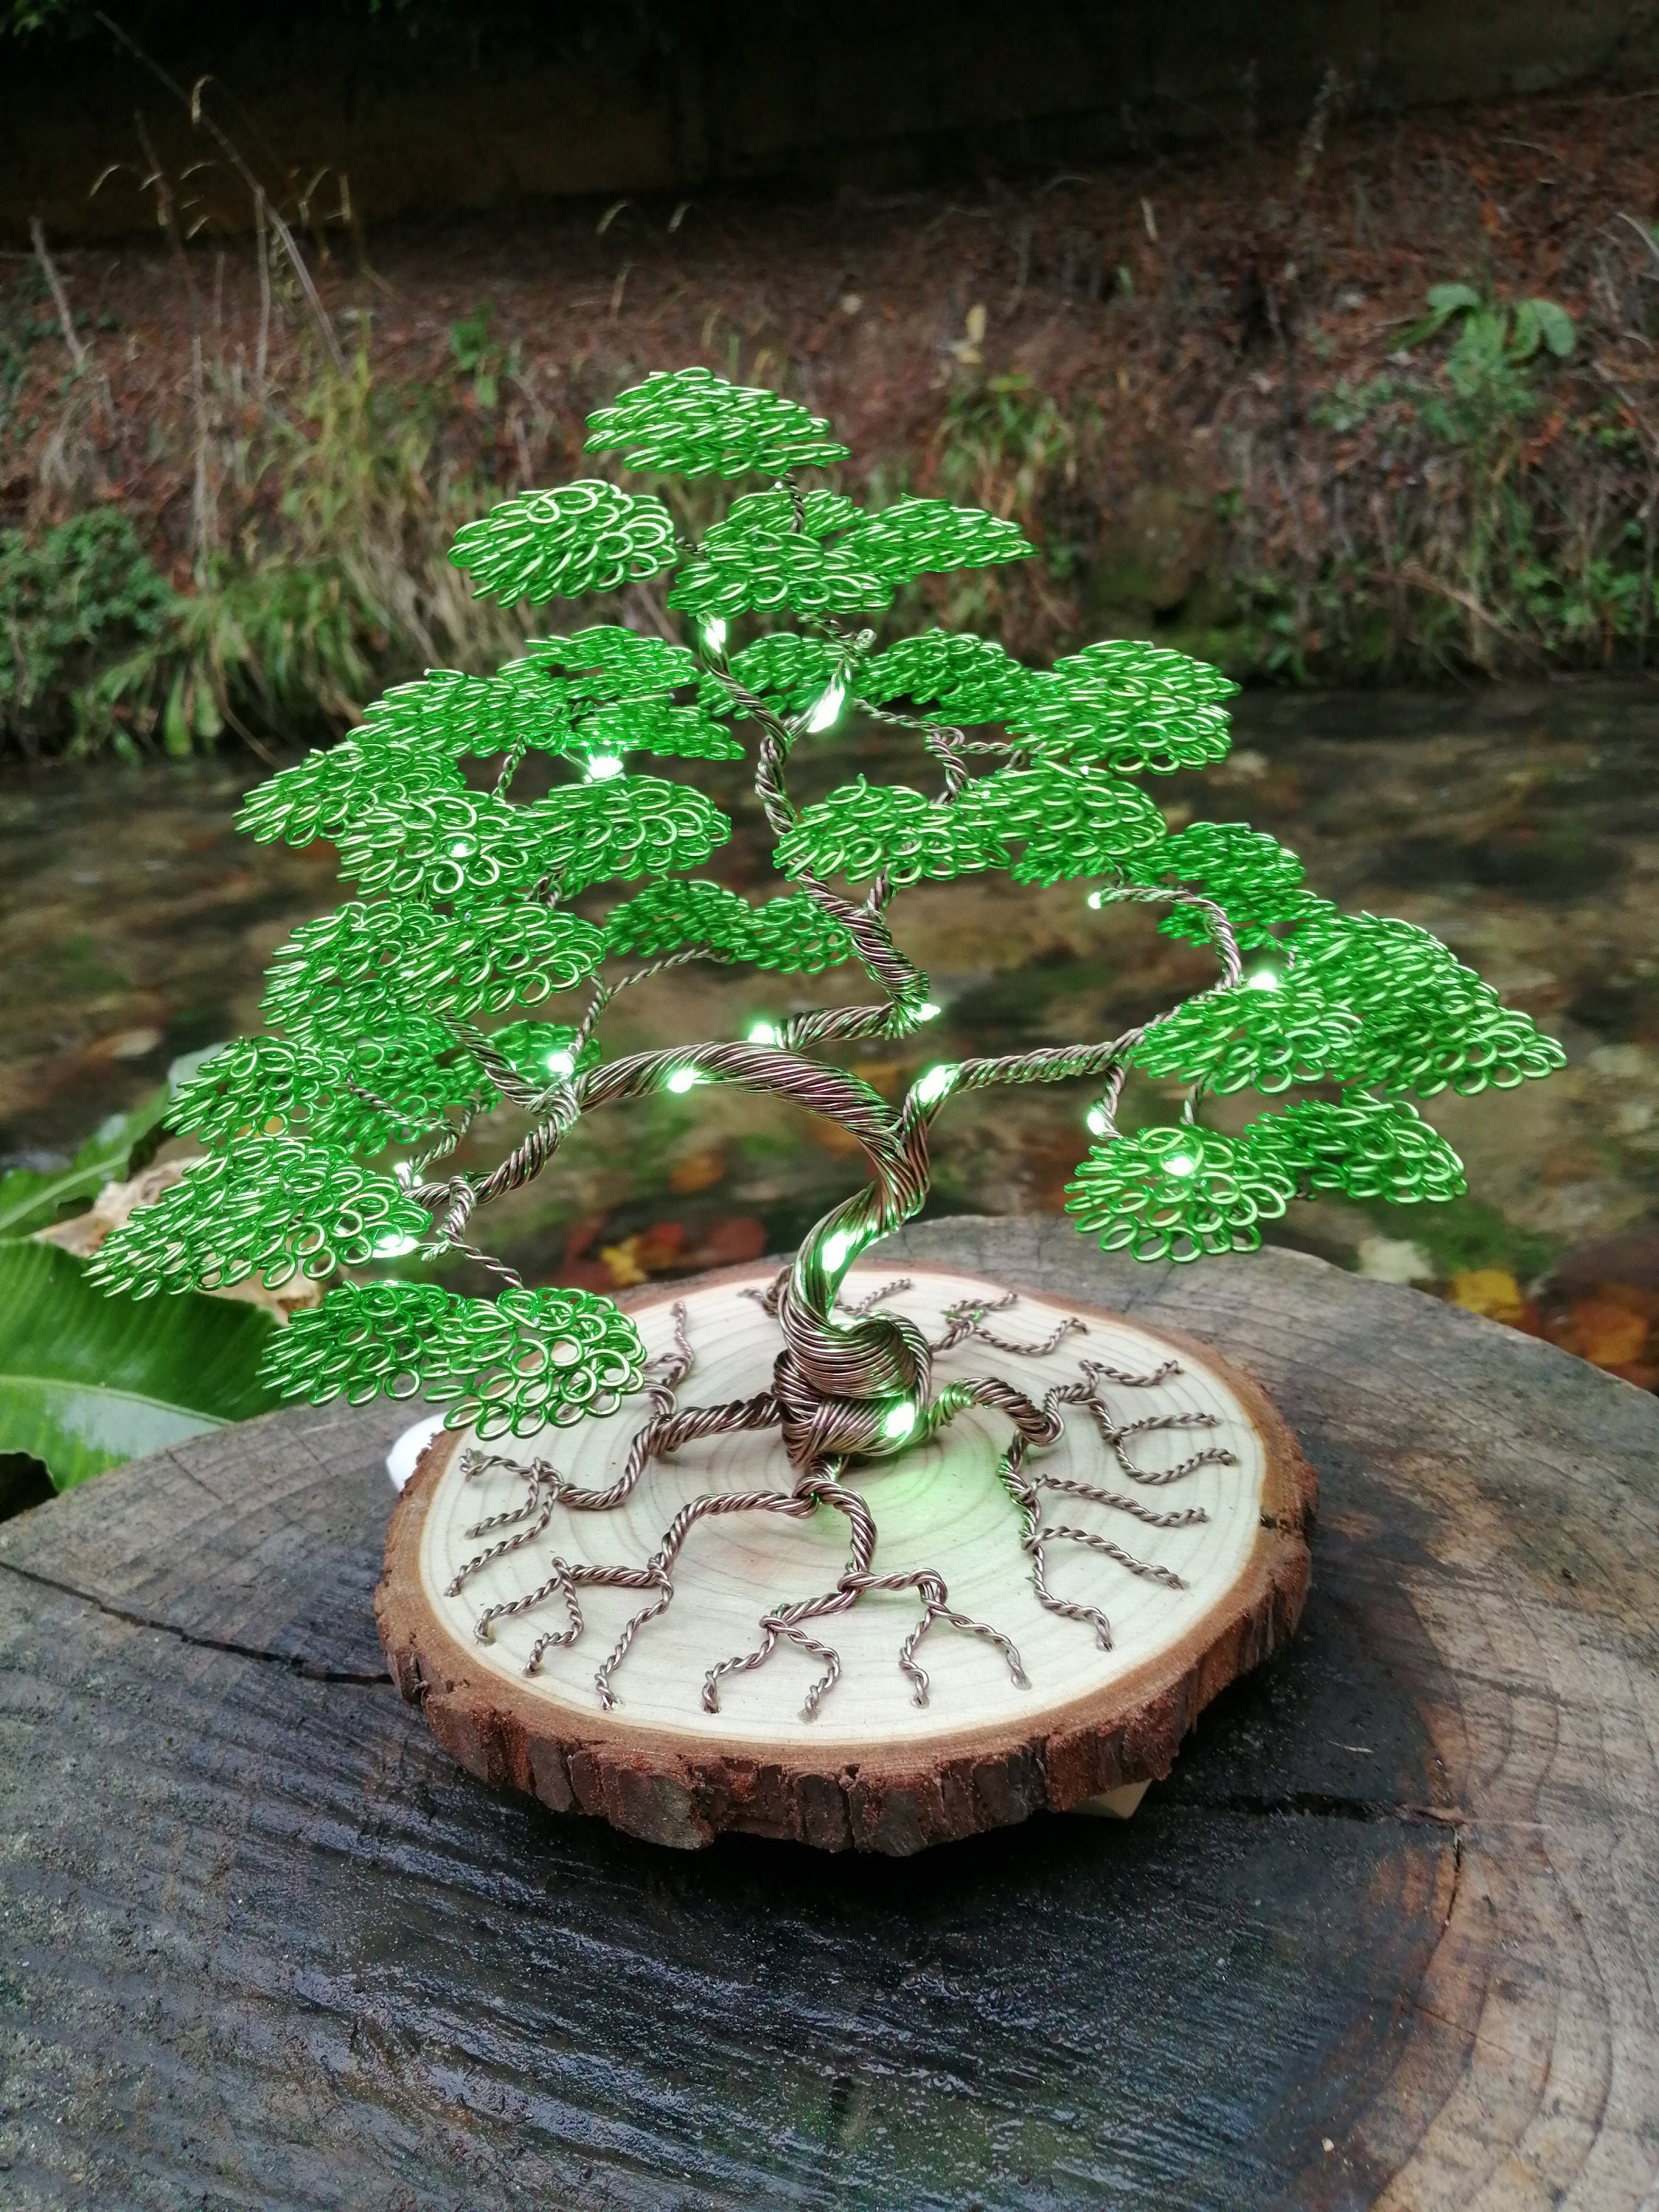 Alambre bonsai fotografías e imágenes de alta resolución - Página 2 - Alamy